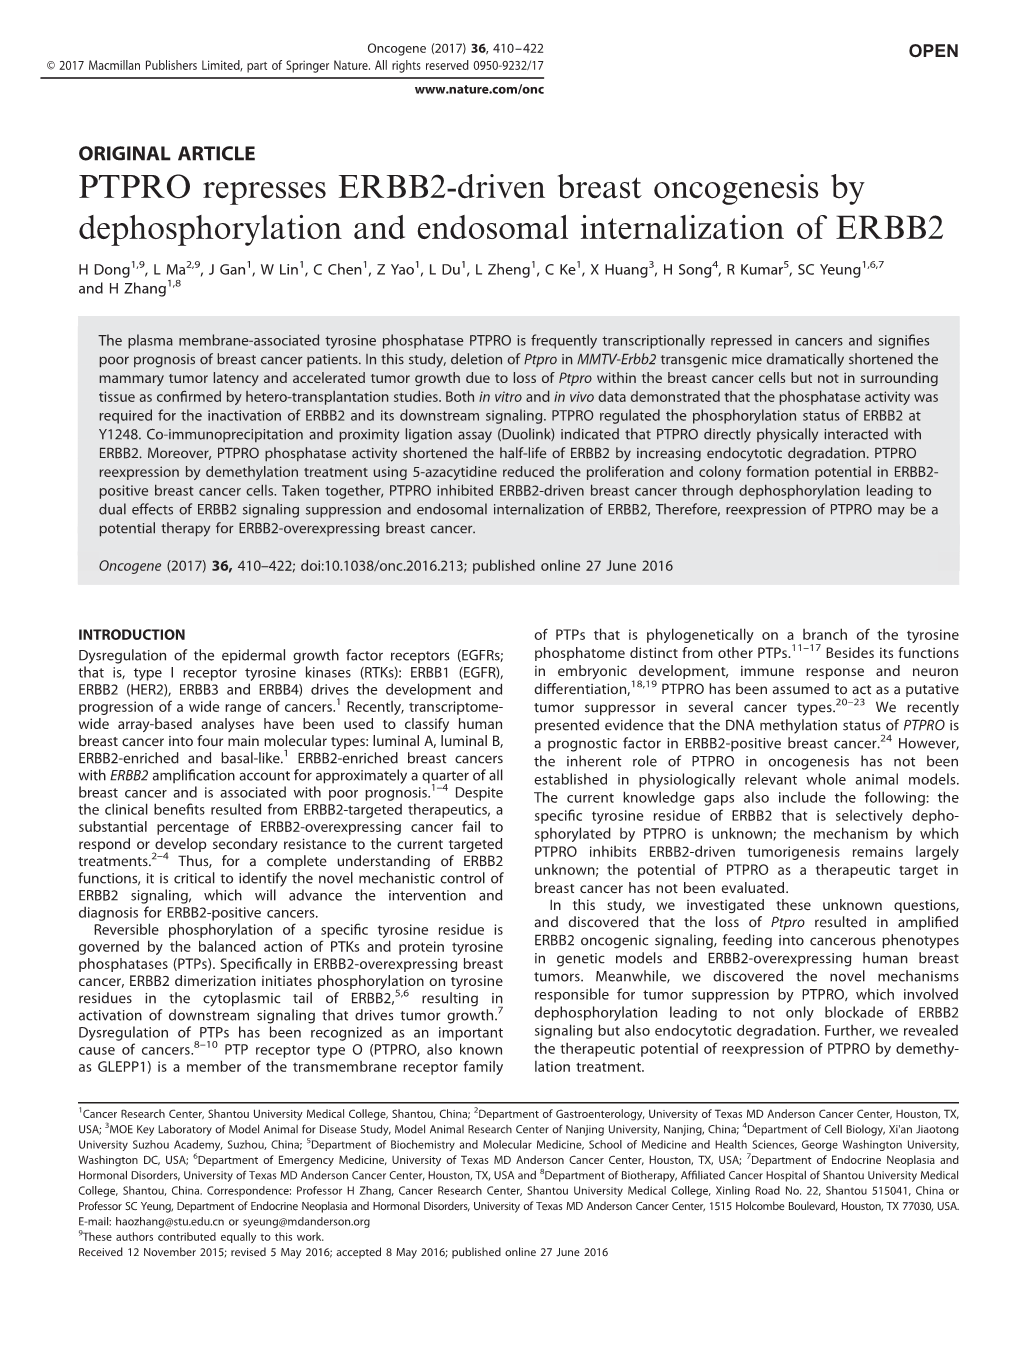 PTPRO Represses ERBB2-Driven Breast Oncogenesis by Dephosphorylation and Endosomal Internalization of ERBB2